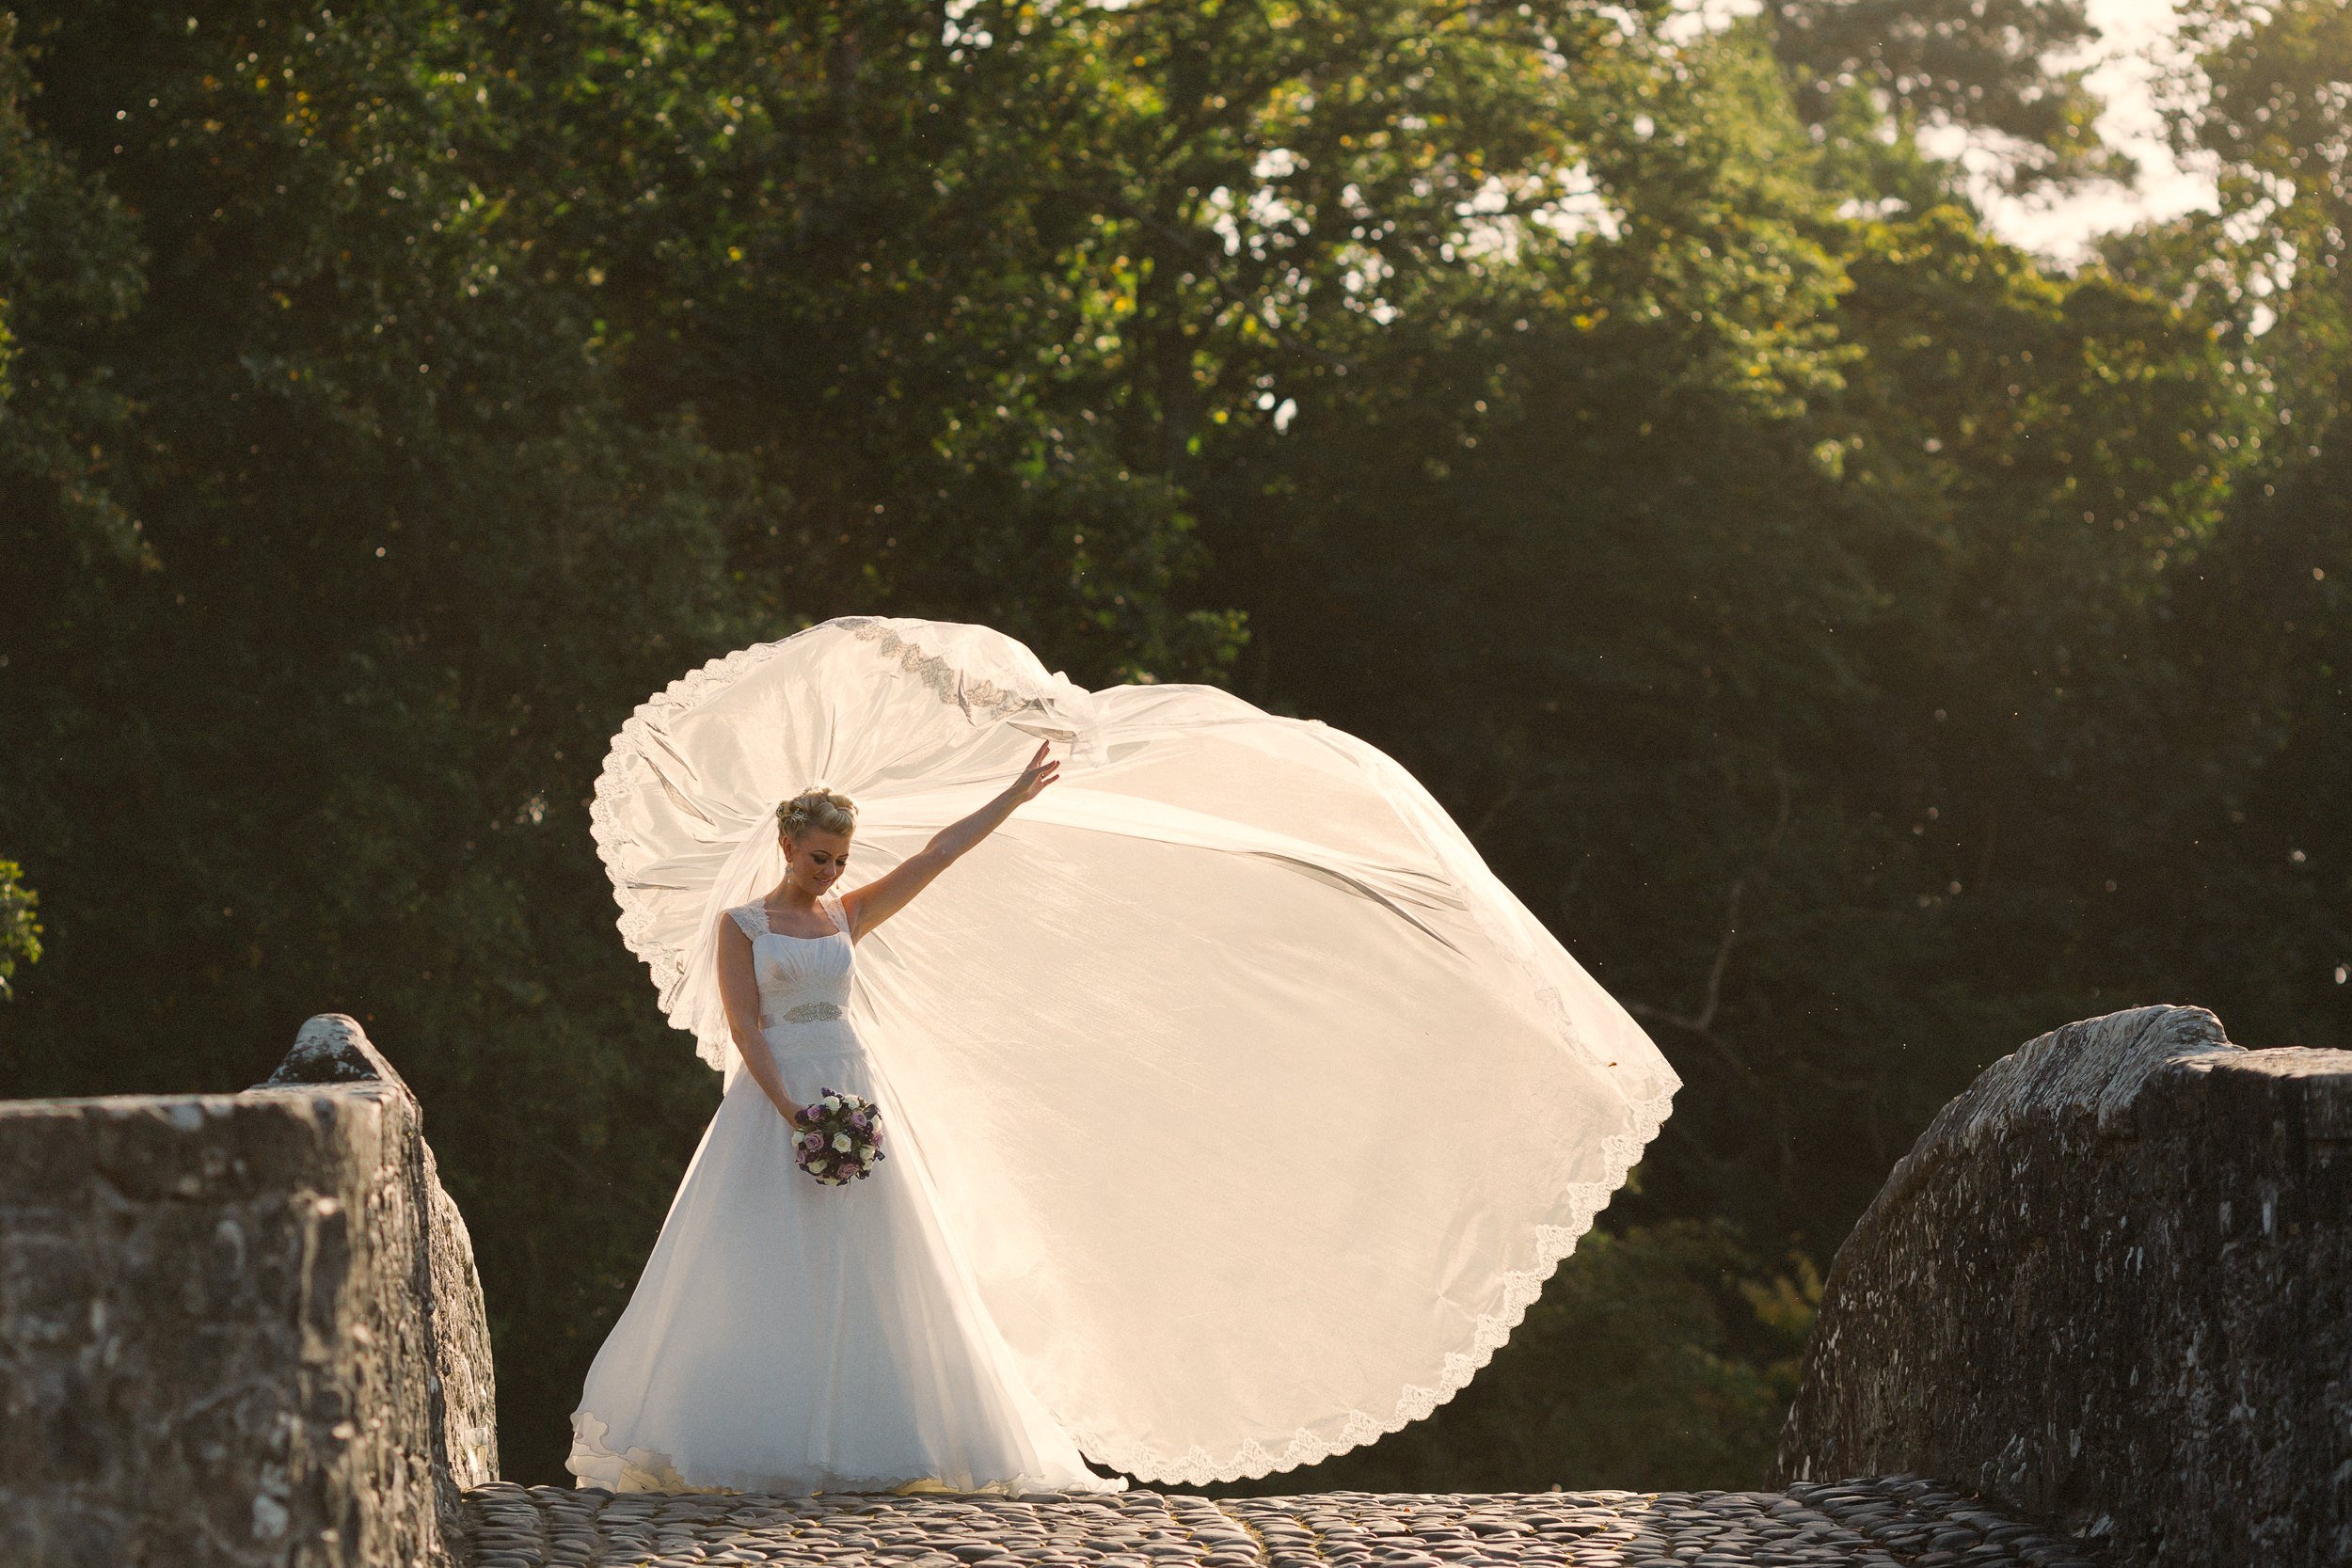  Bride stands on bride at brig o Doon with sun behind veil wedding photographer scotland prices 